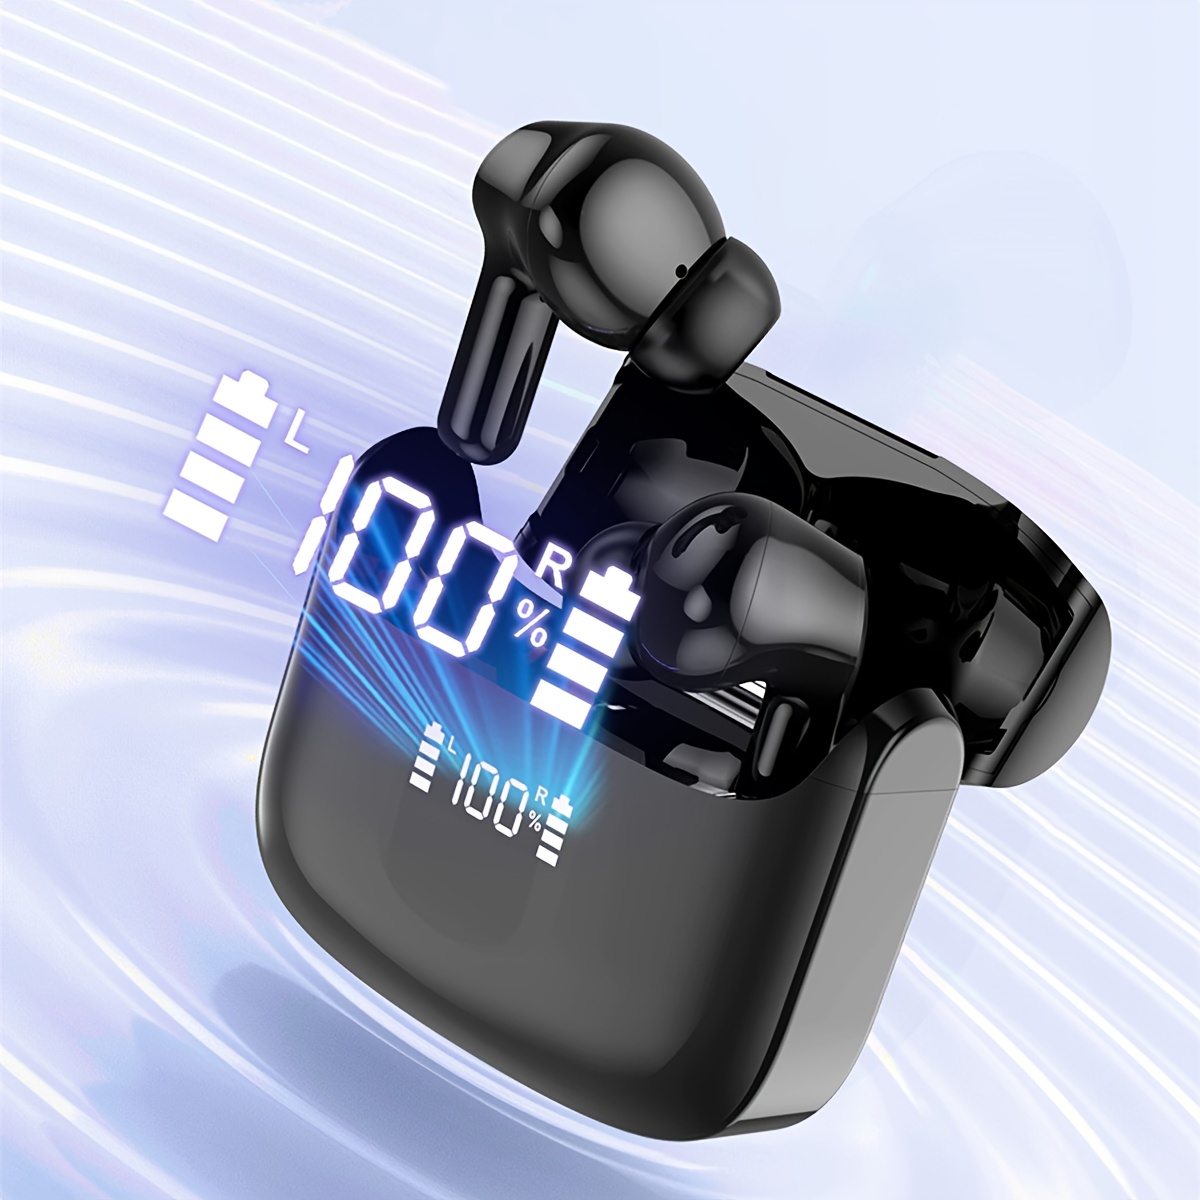 TAGRY Bluetooth Headphones True Wireless Earbuds 60H Playback LED Power Display Earphones with Wireless Charging Case Ipx7 Waterproof in-Ear Earbuds